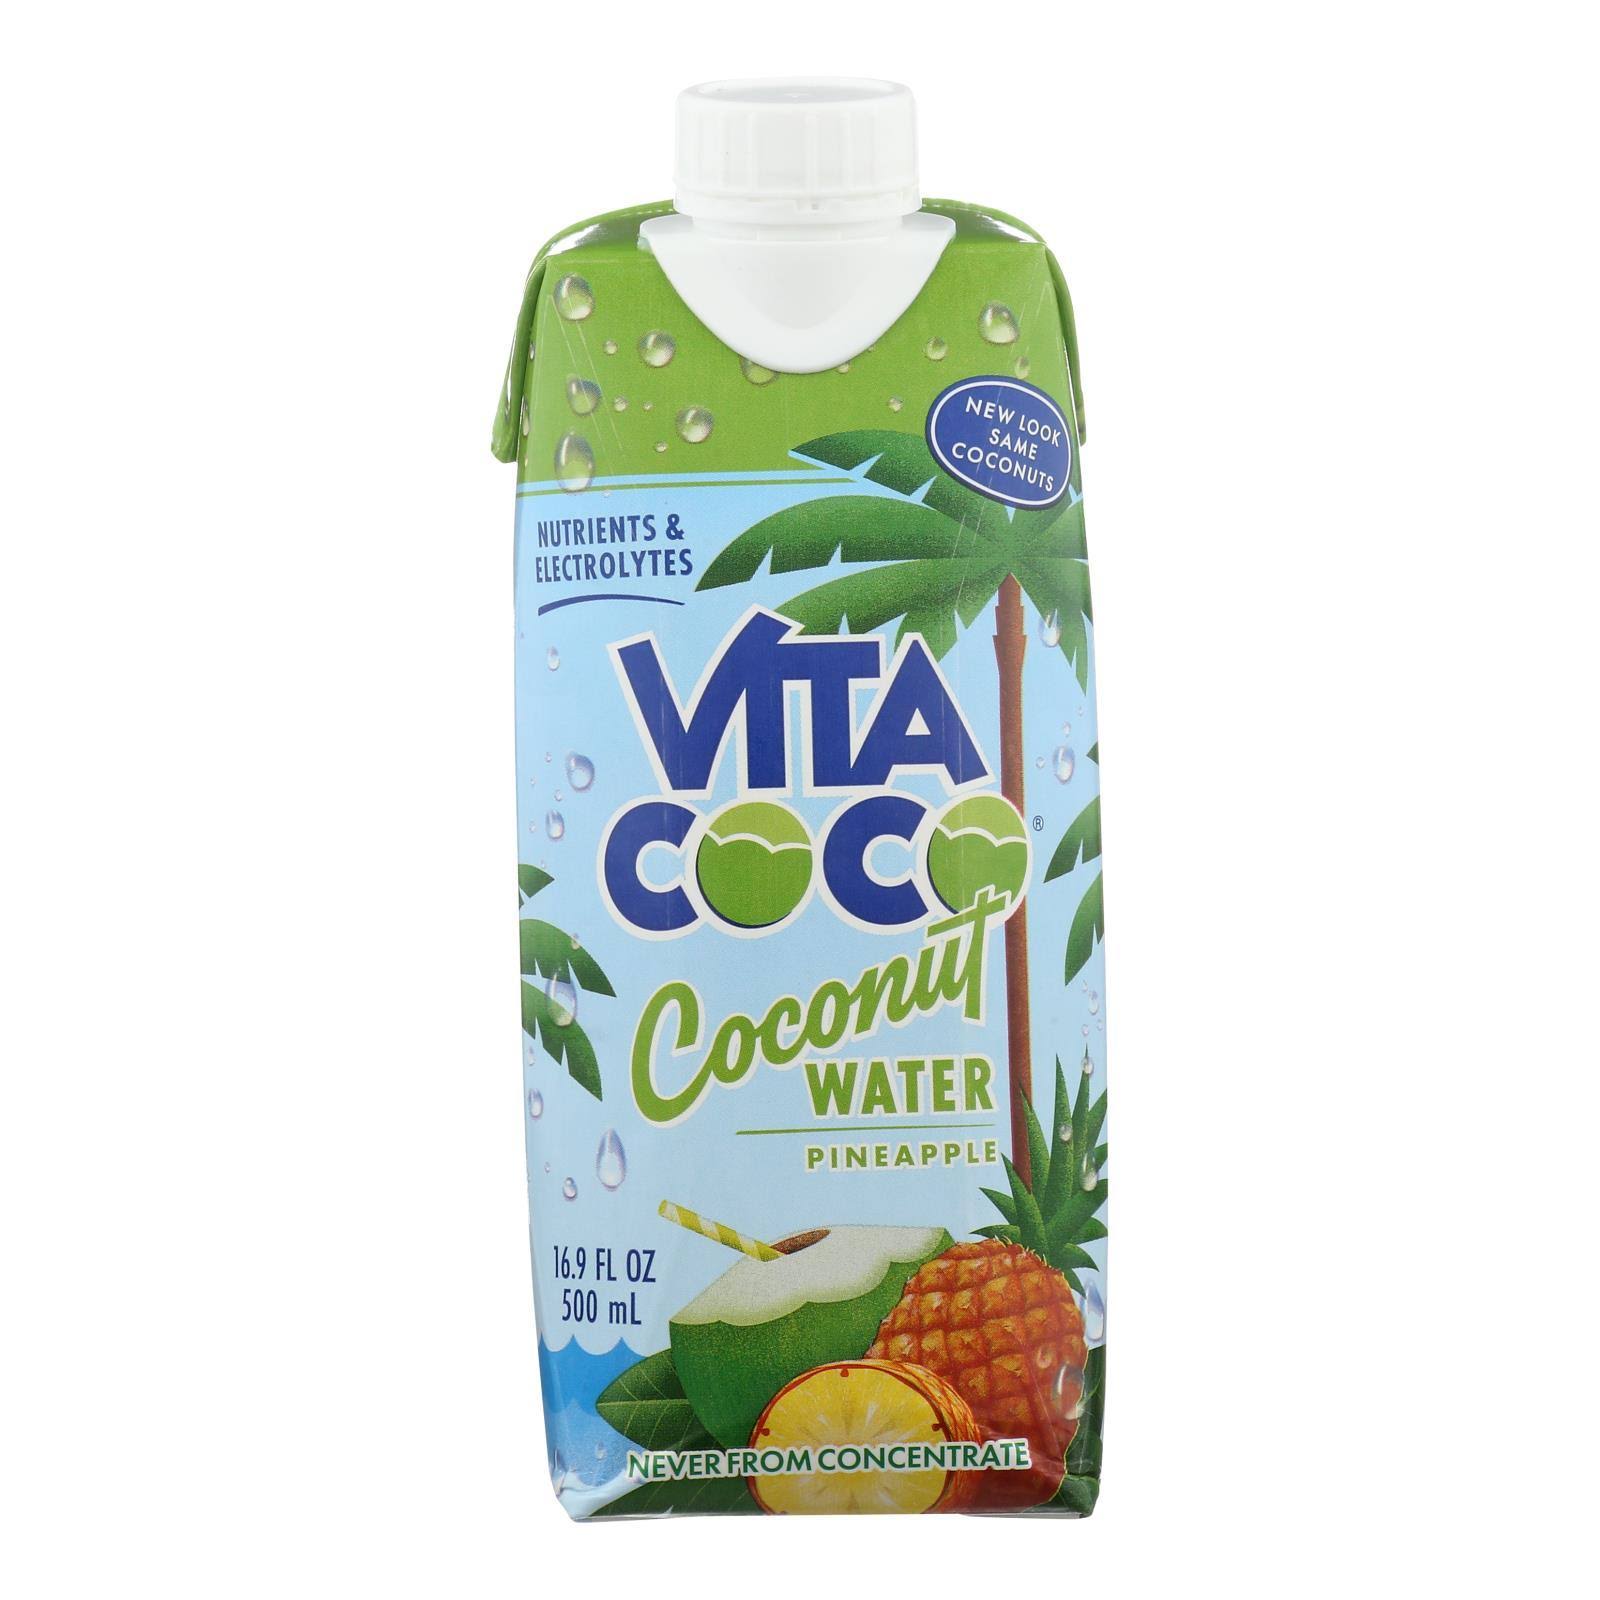 Vita Coco Coconut Water - with Pineapple, 500ml